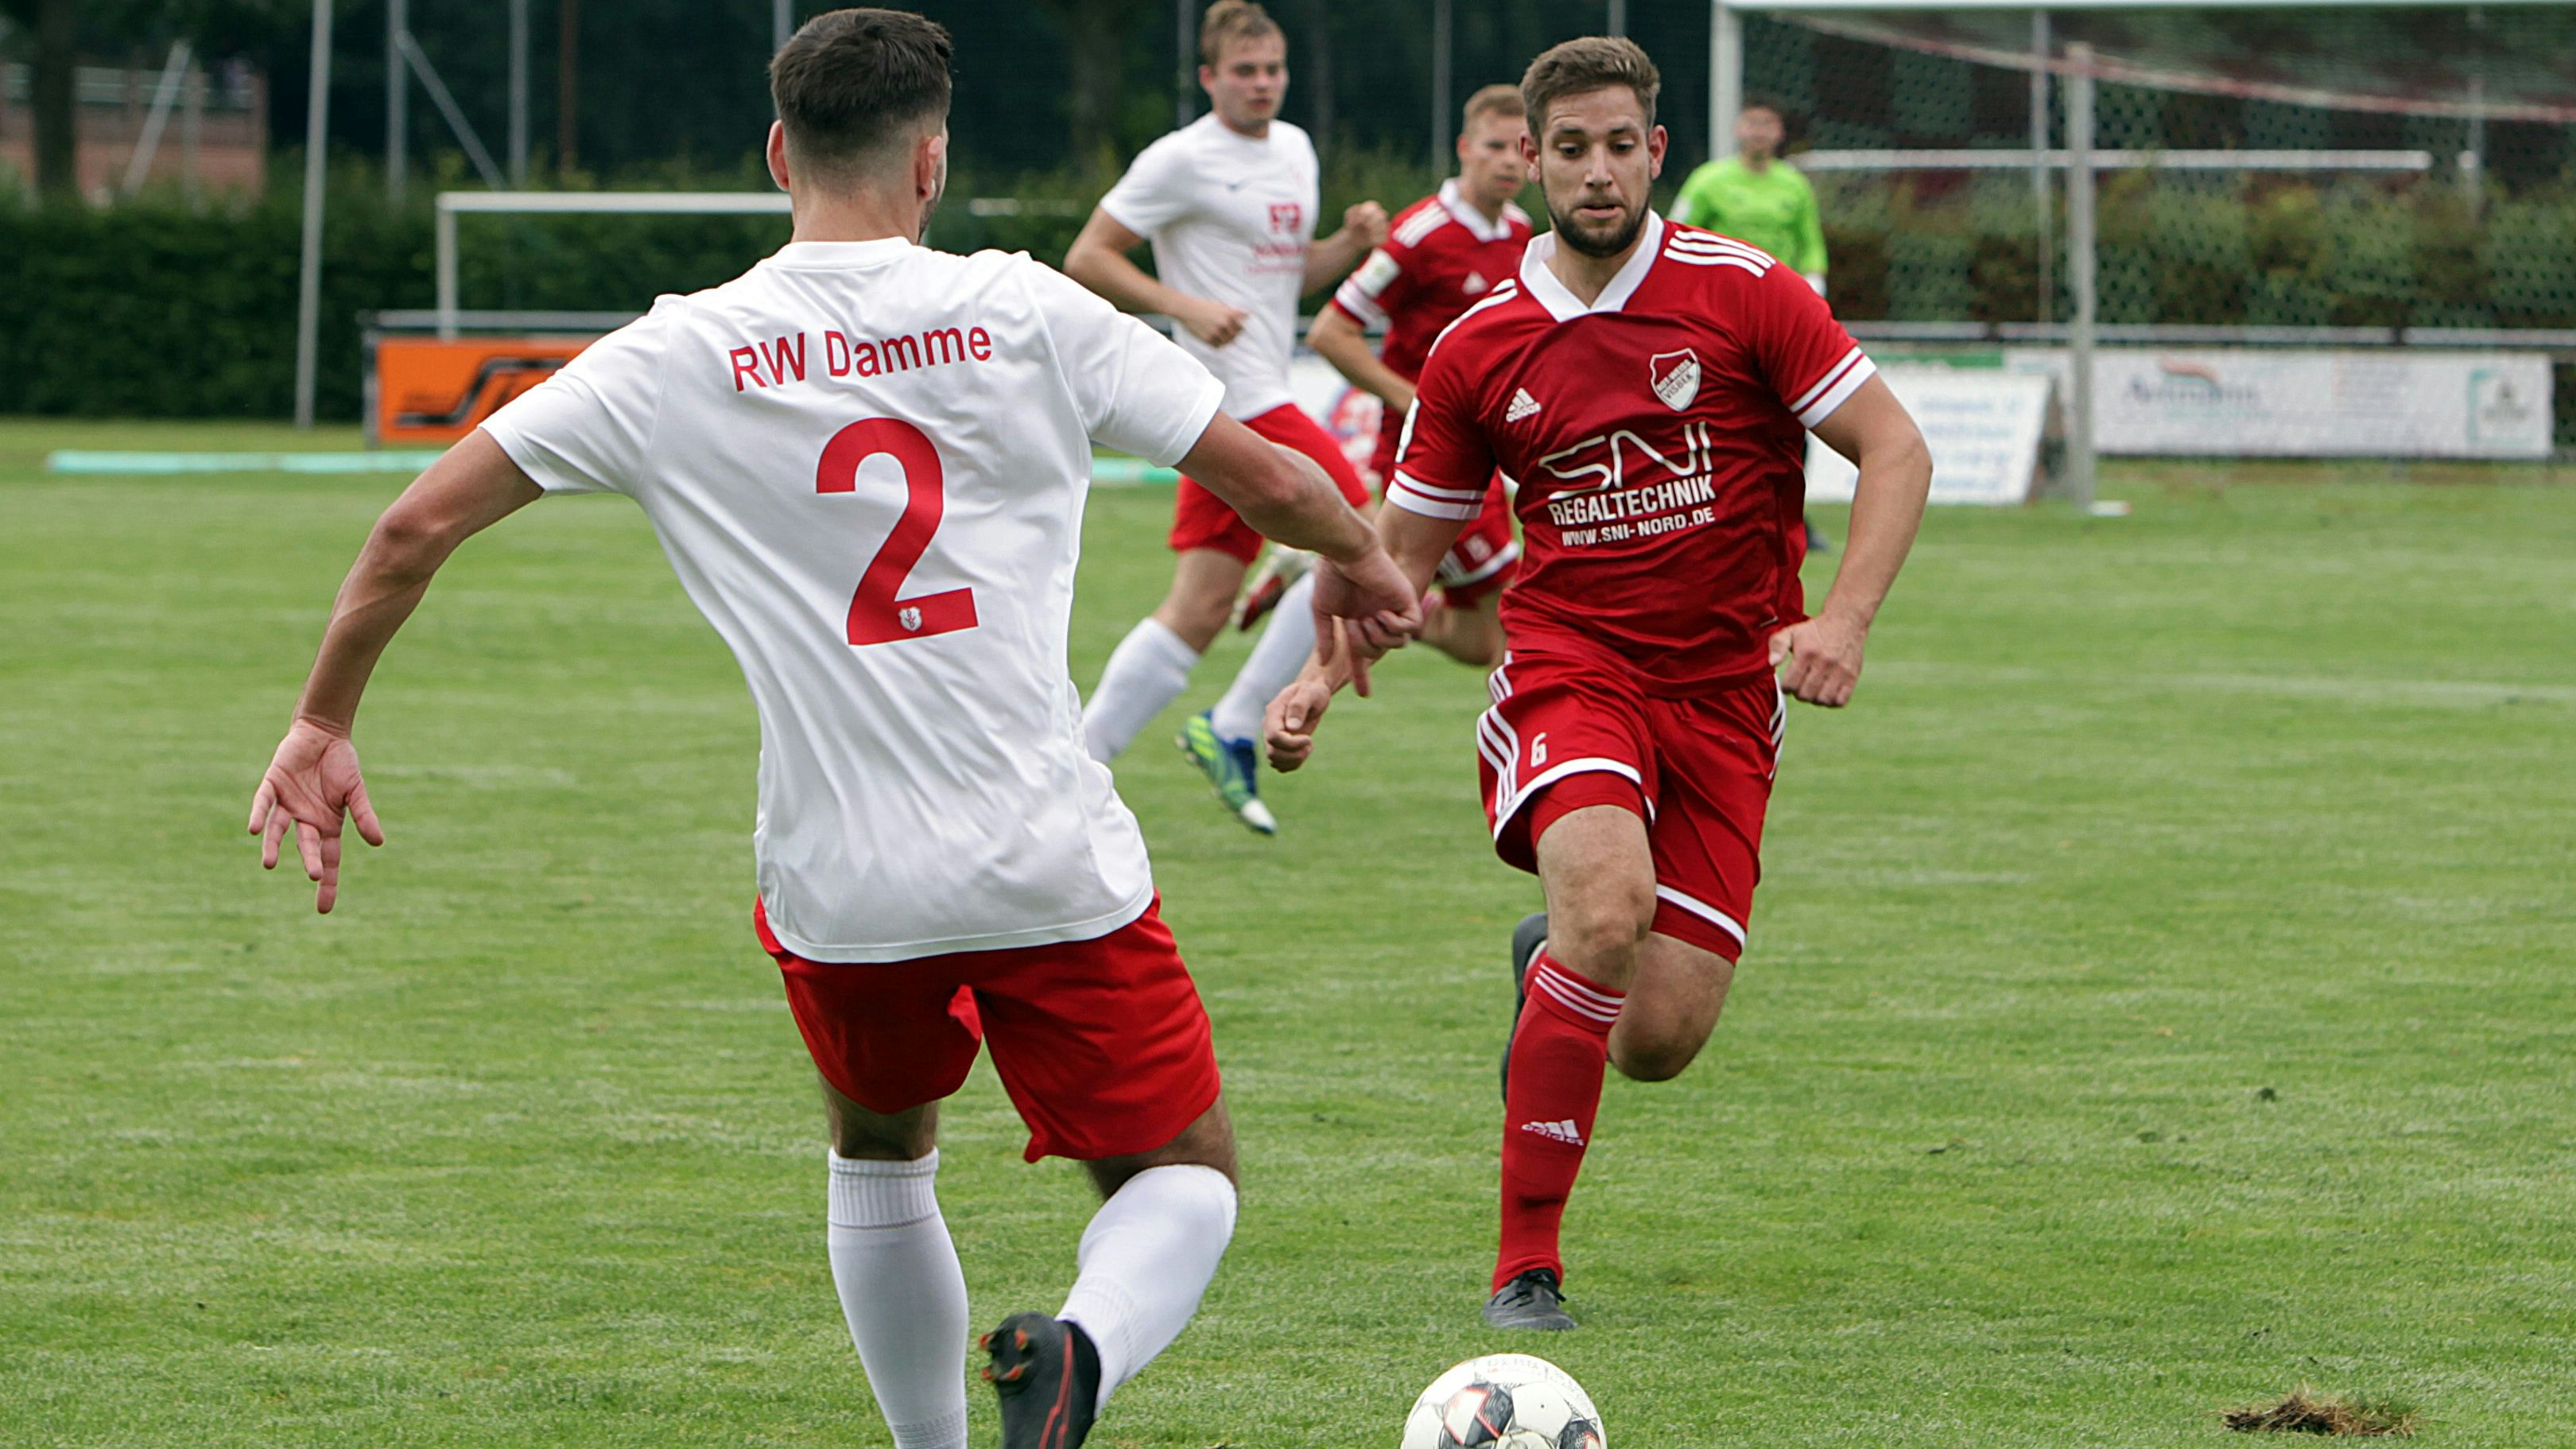 Kampf um den Ball: Dammes Thorben Jaschek (links) im Duell mit Visbeks Spieler Maximilian Reinke (rechts). Foto: Schikora